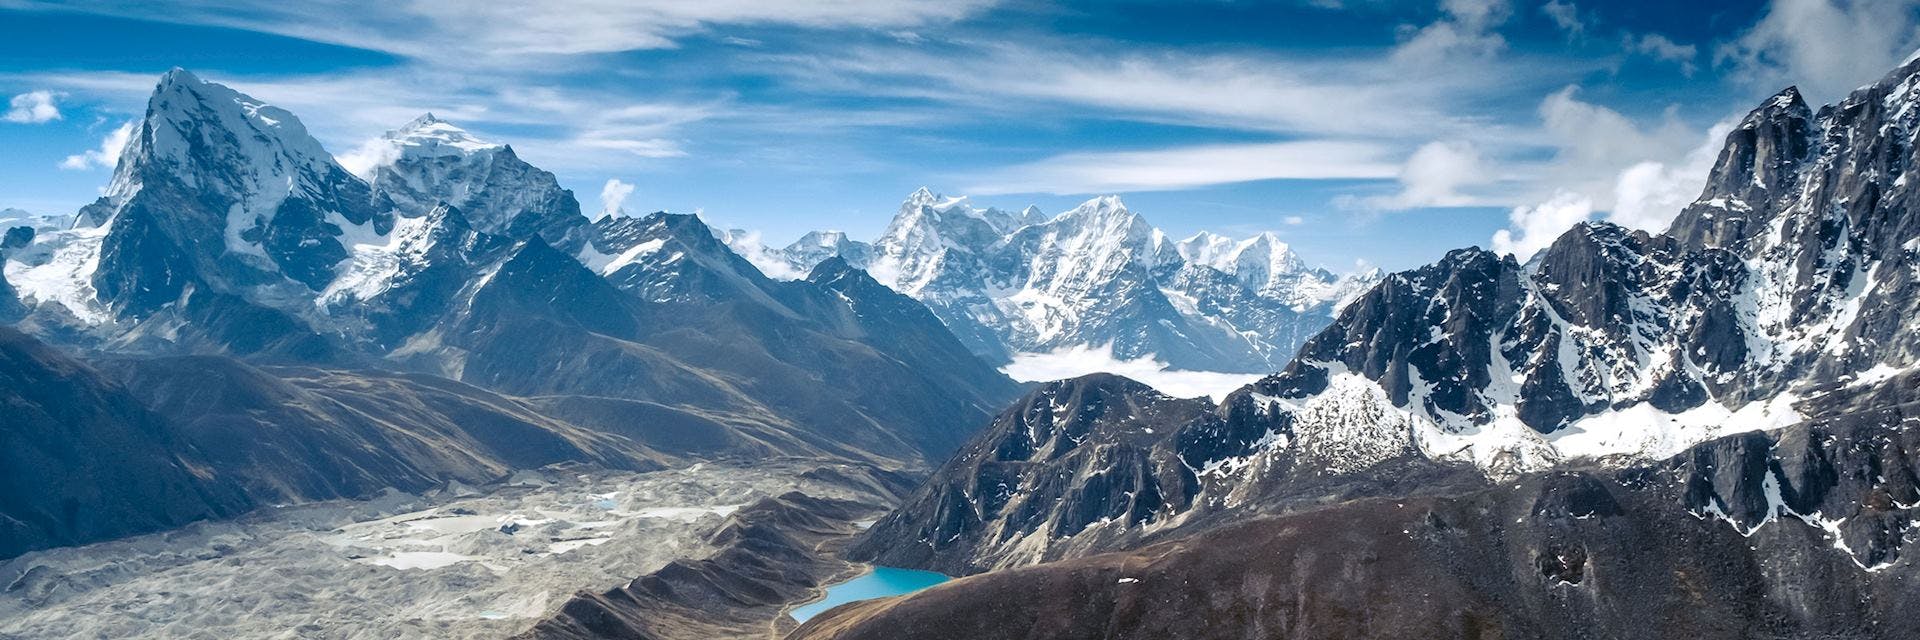 Luxury Everest Base Camp Trek Complete Information